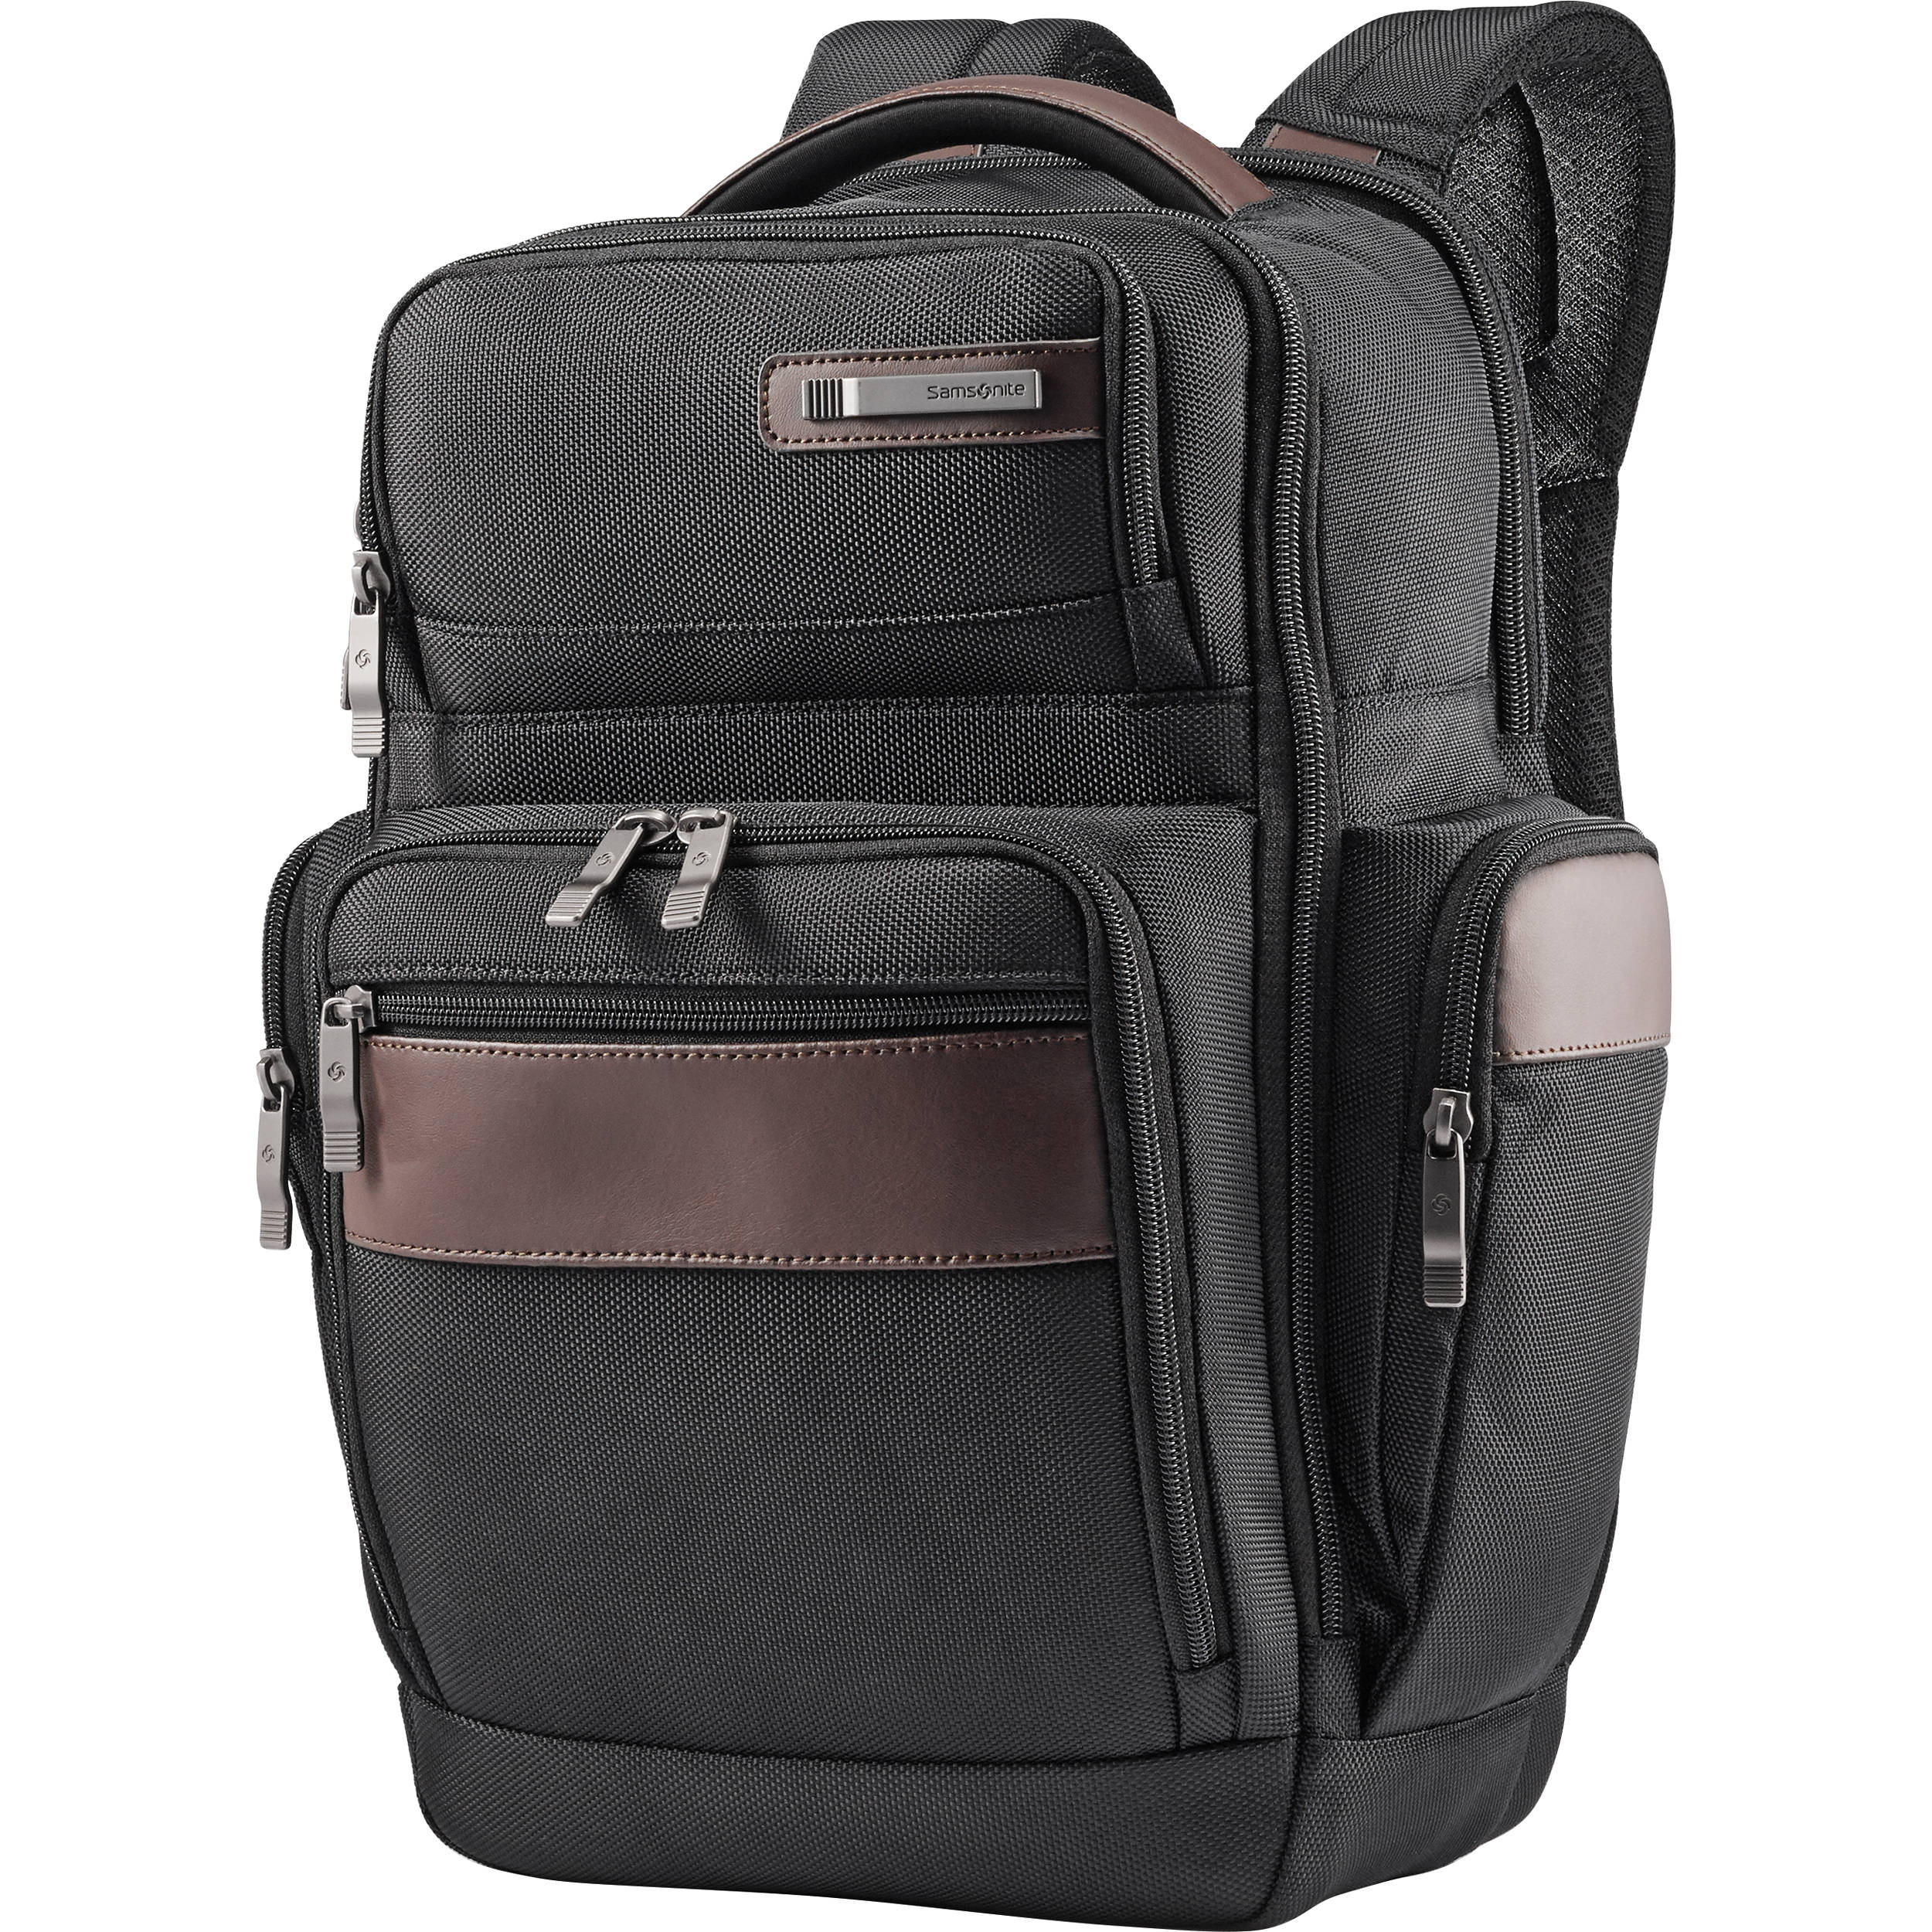 black square backpack